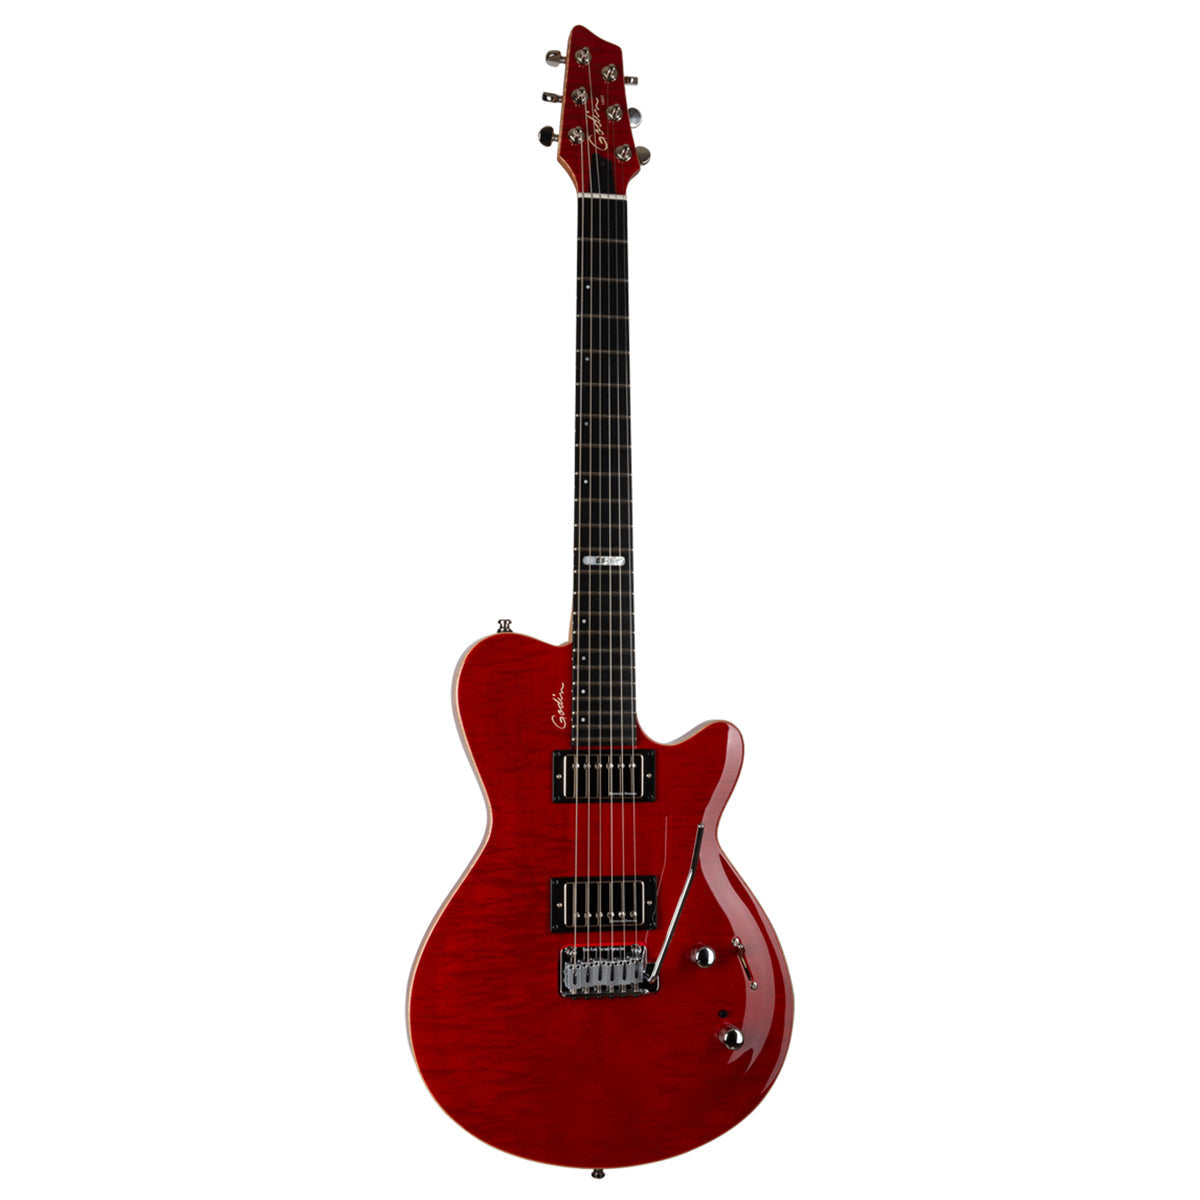 Godin DS-1 Daryl Stuermer Signature Electric Guitar, Electric Guitar for sale at Richards Guitars.